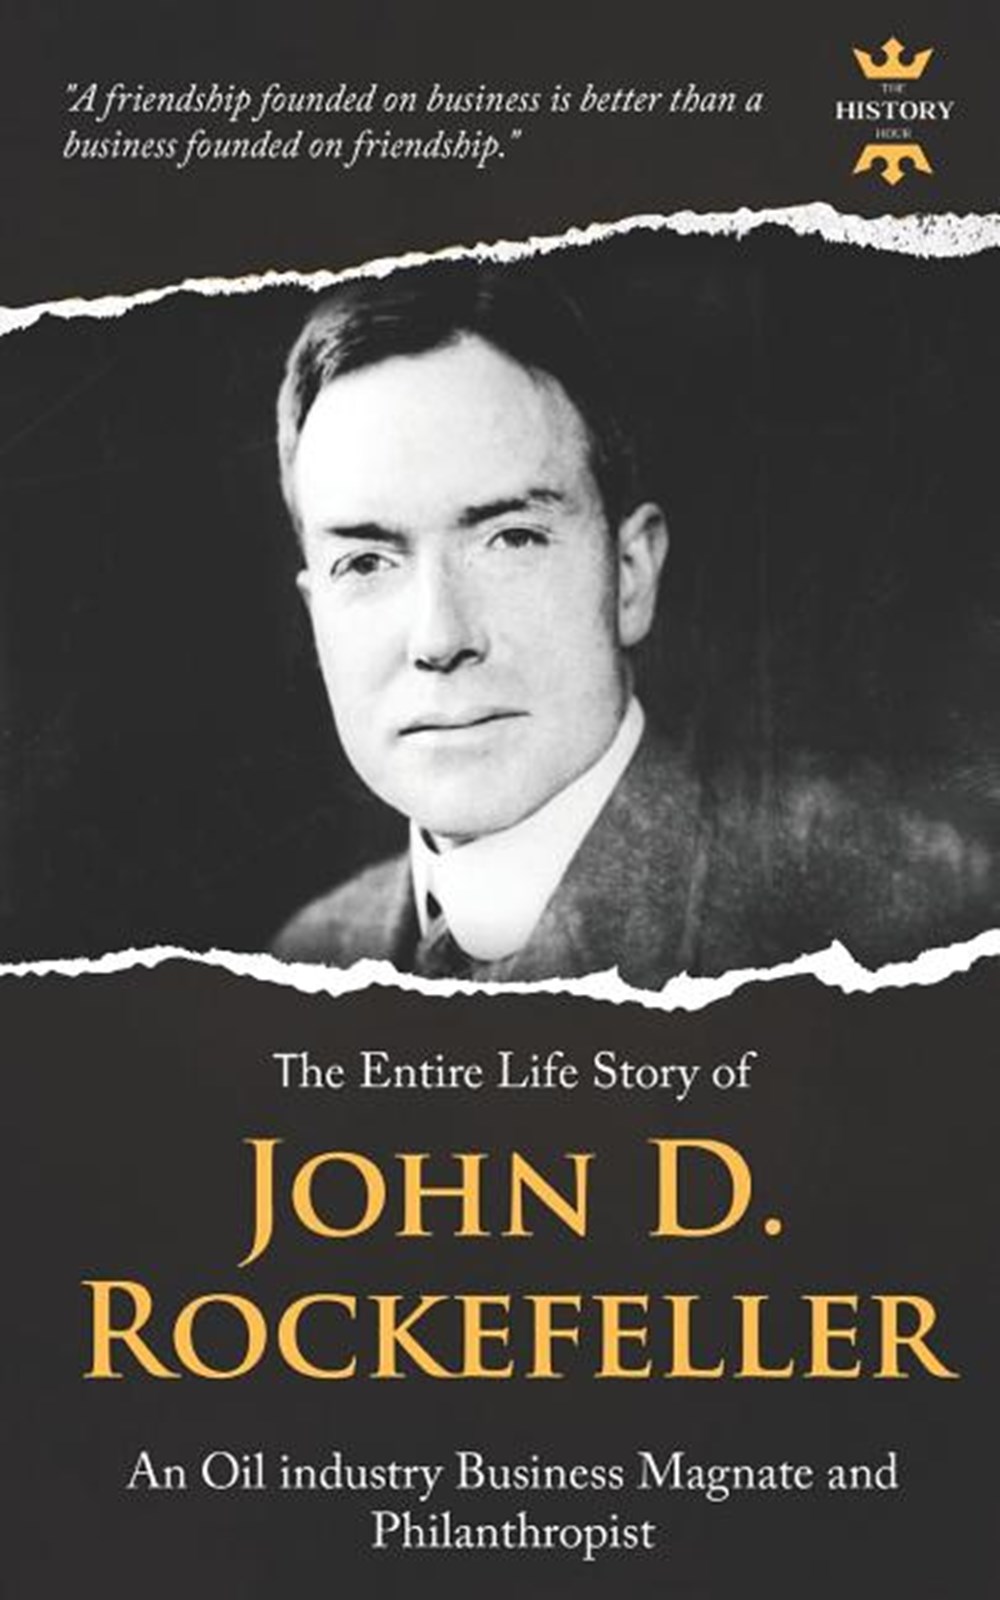 John D. Rockefeller, Sr. An Oil industry Business Magnate and Philanthropist. The Entire Life Story